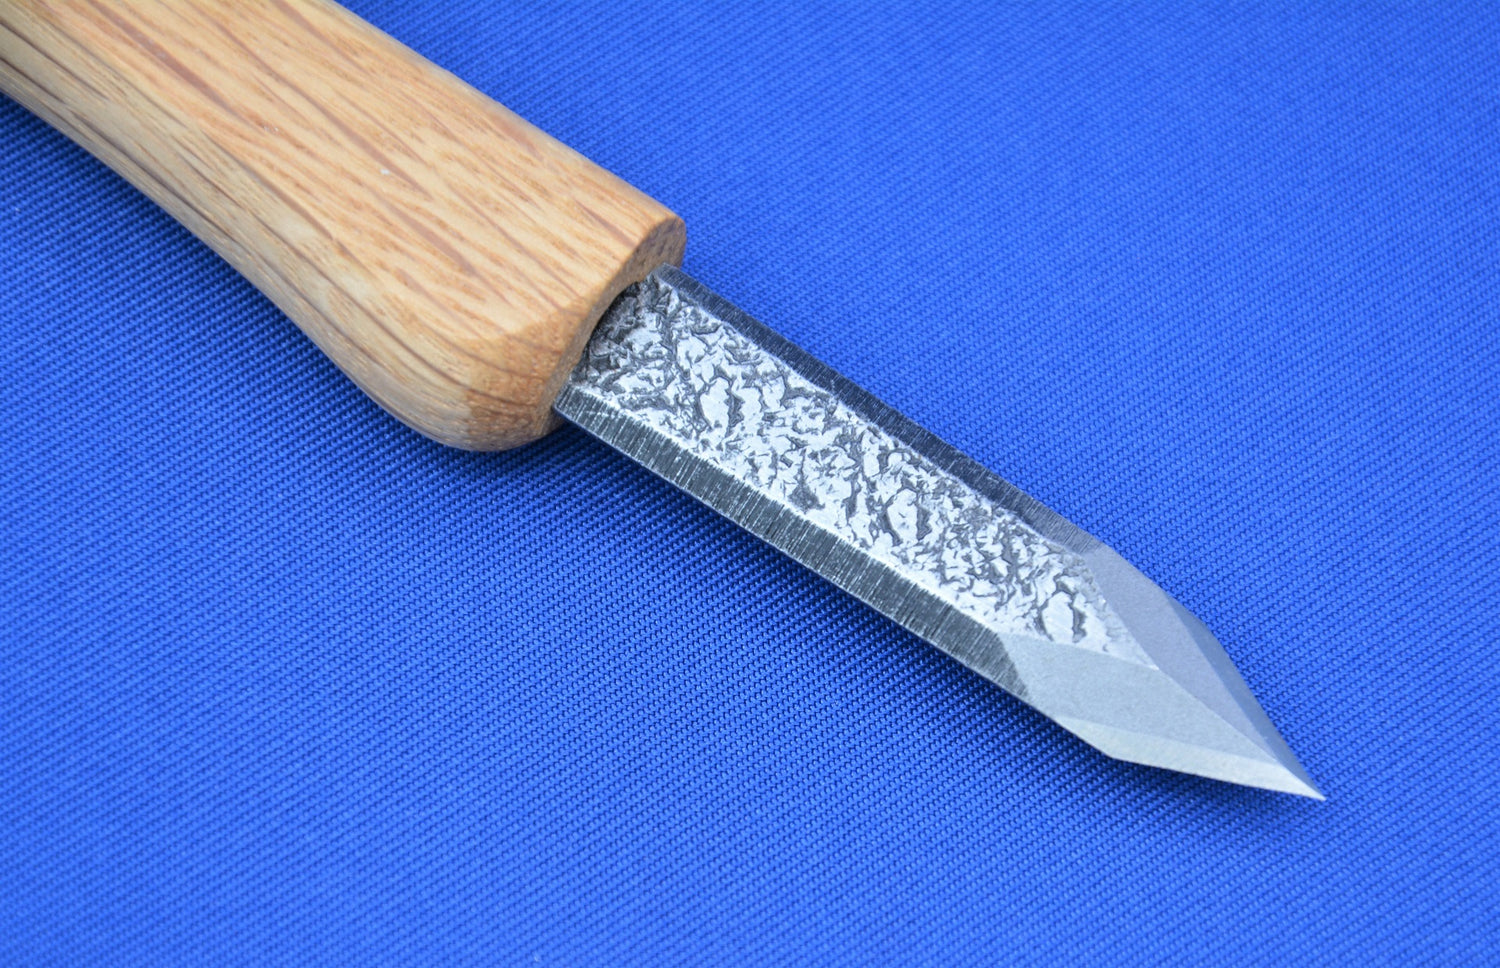 Wood Carving Knives